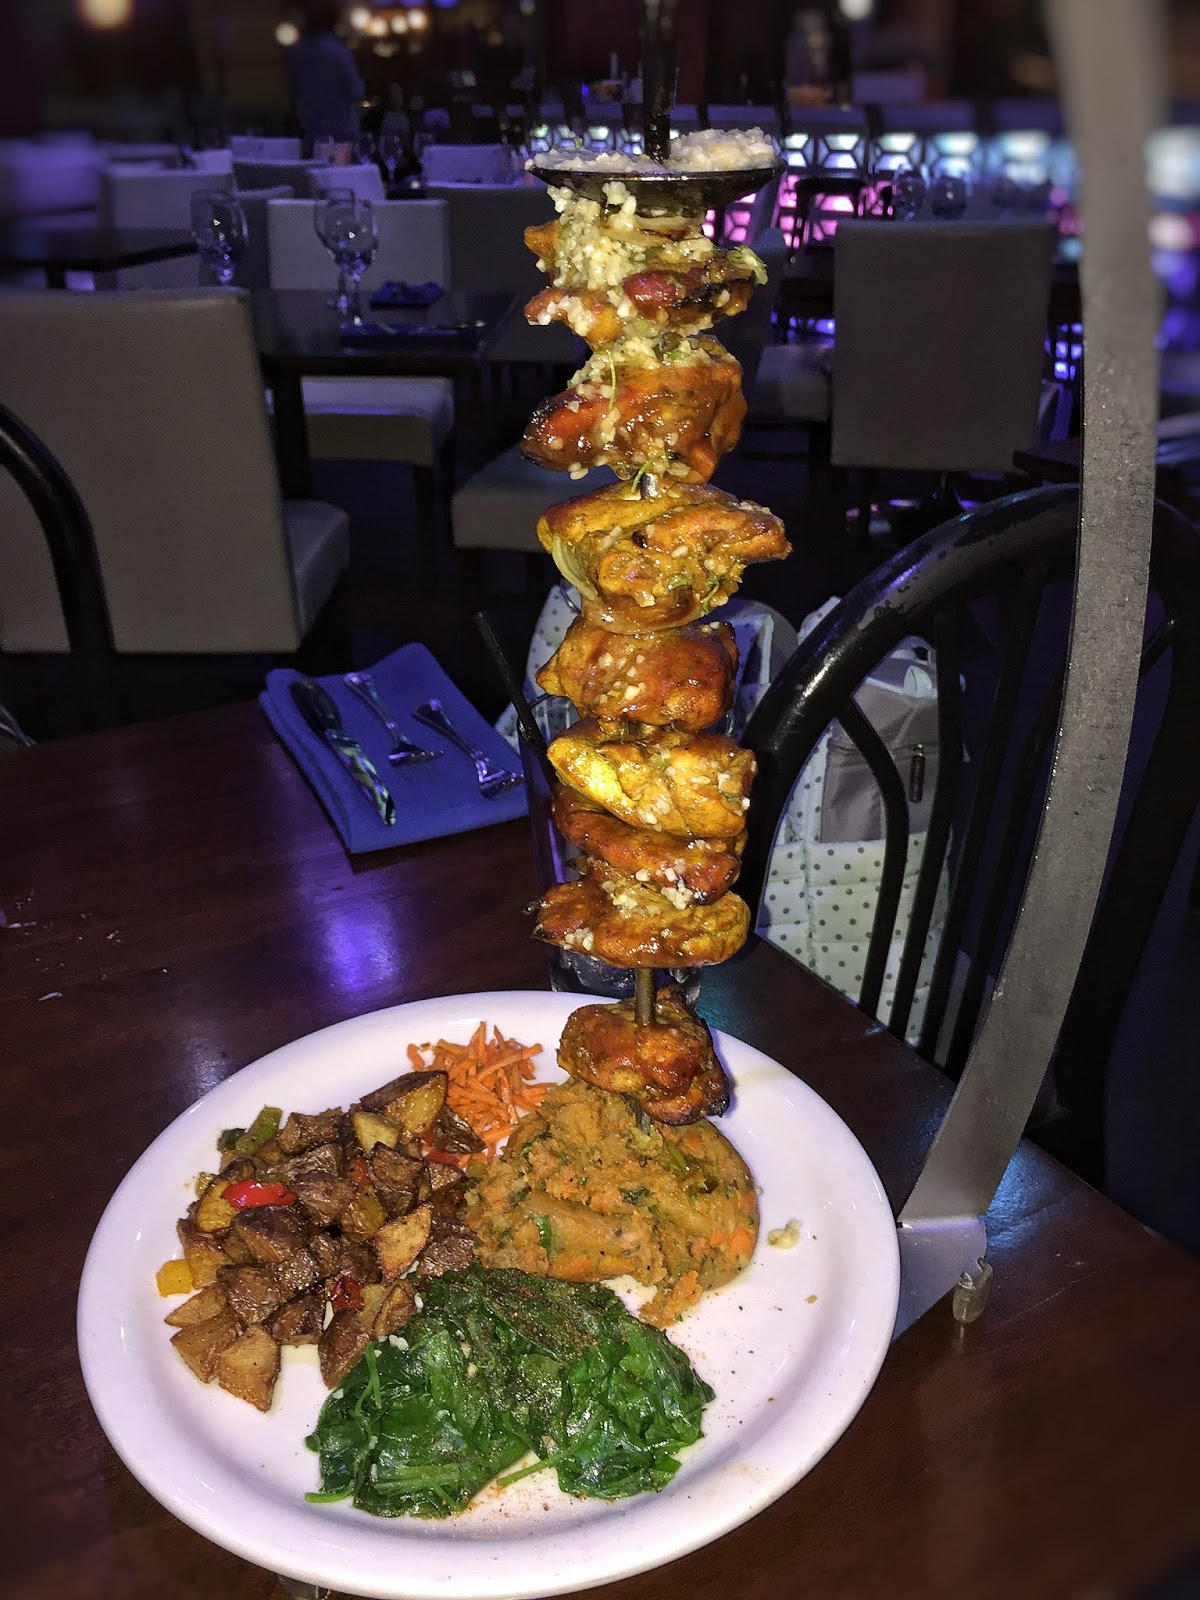 Zain S Halal Reviews Peli Peli One Of Houston S Well Known Restaurants